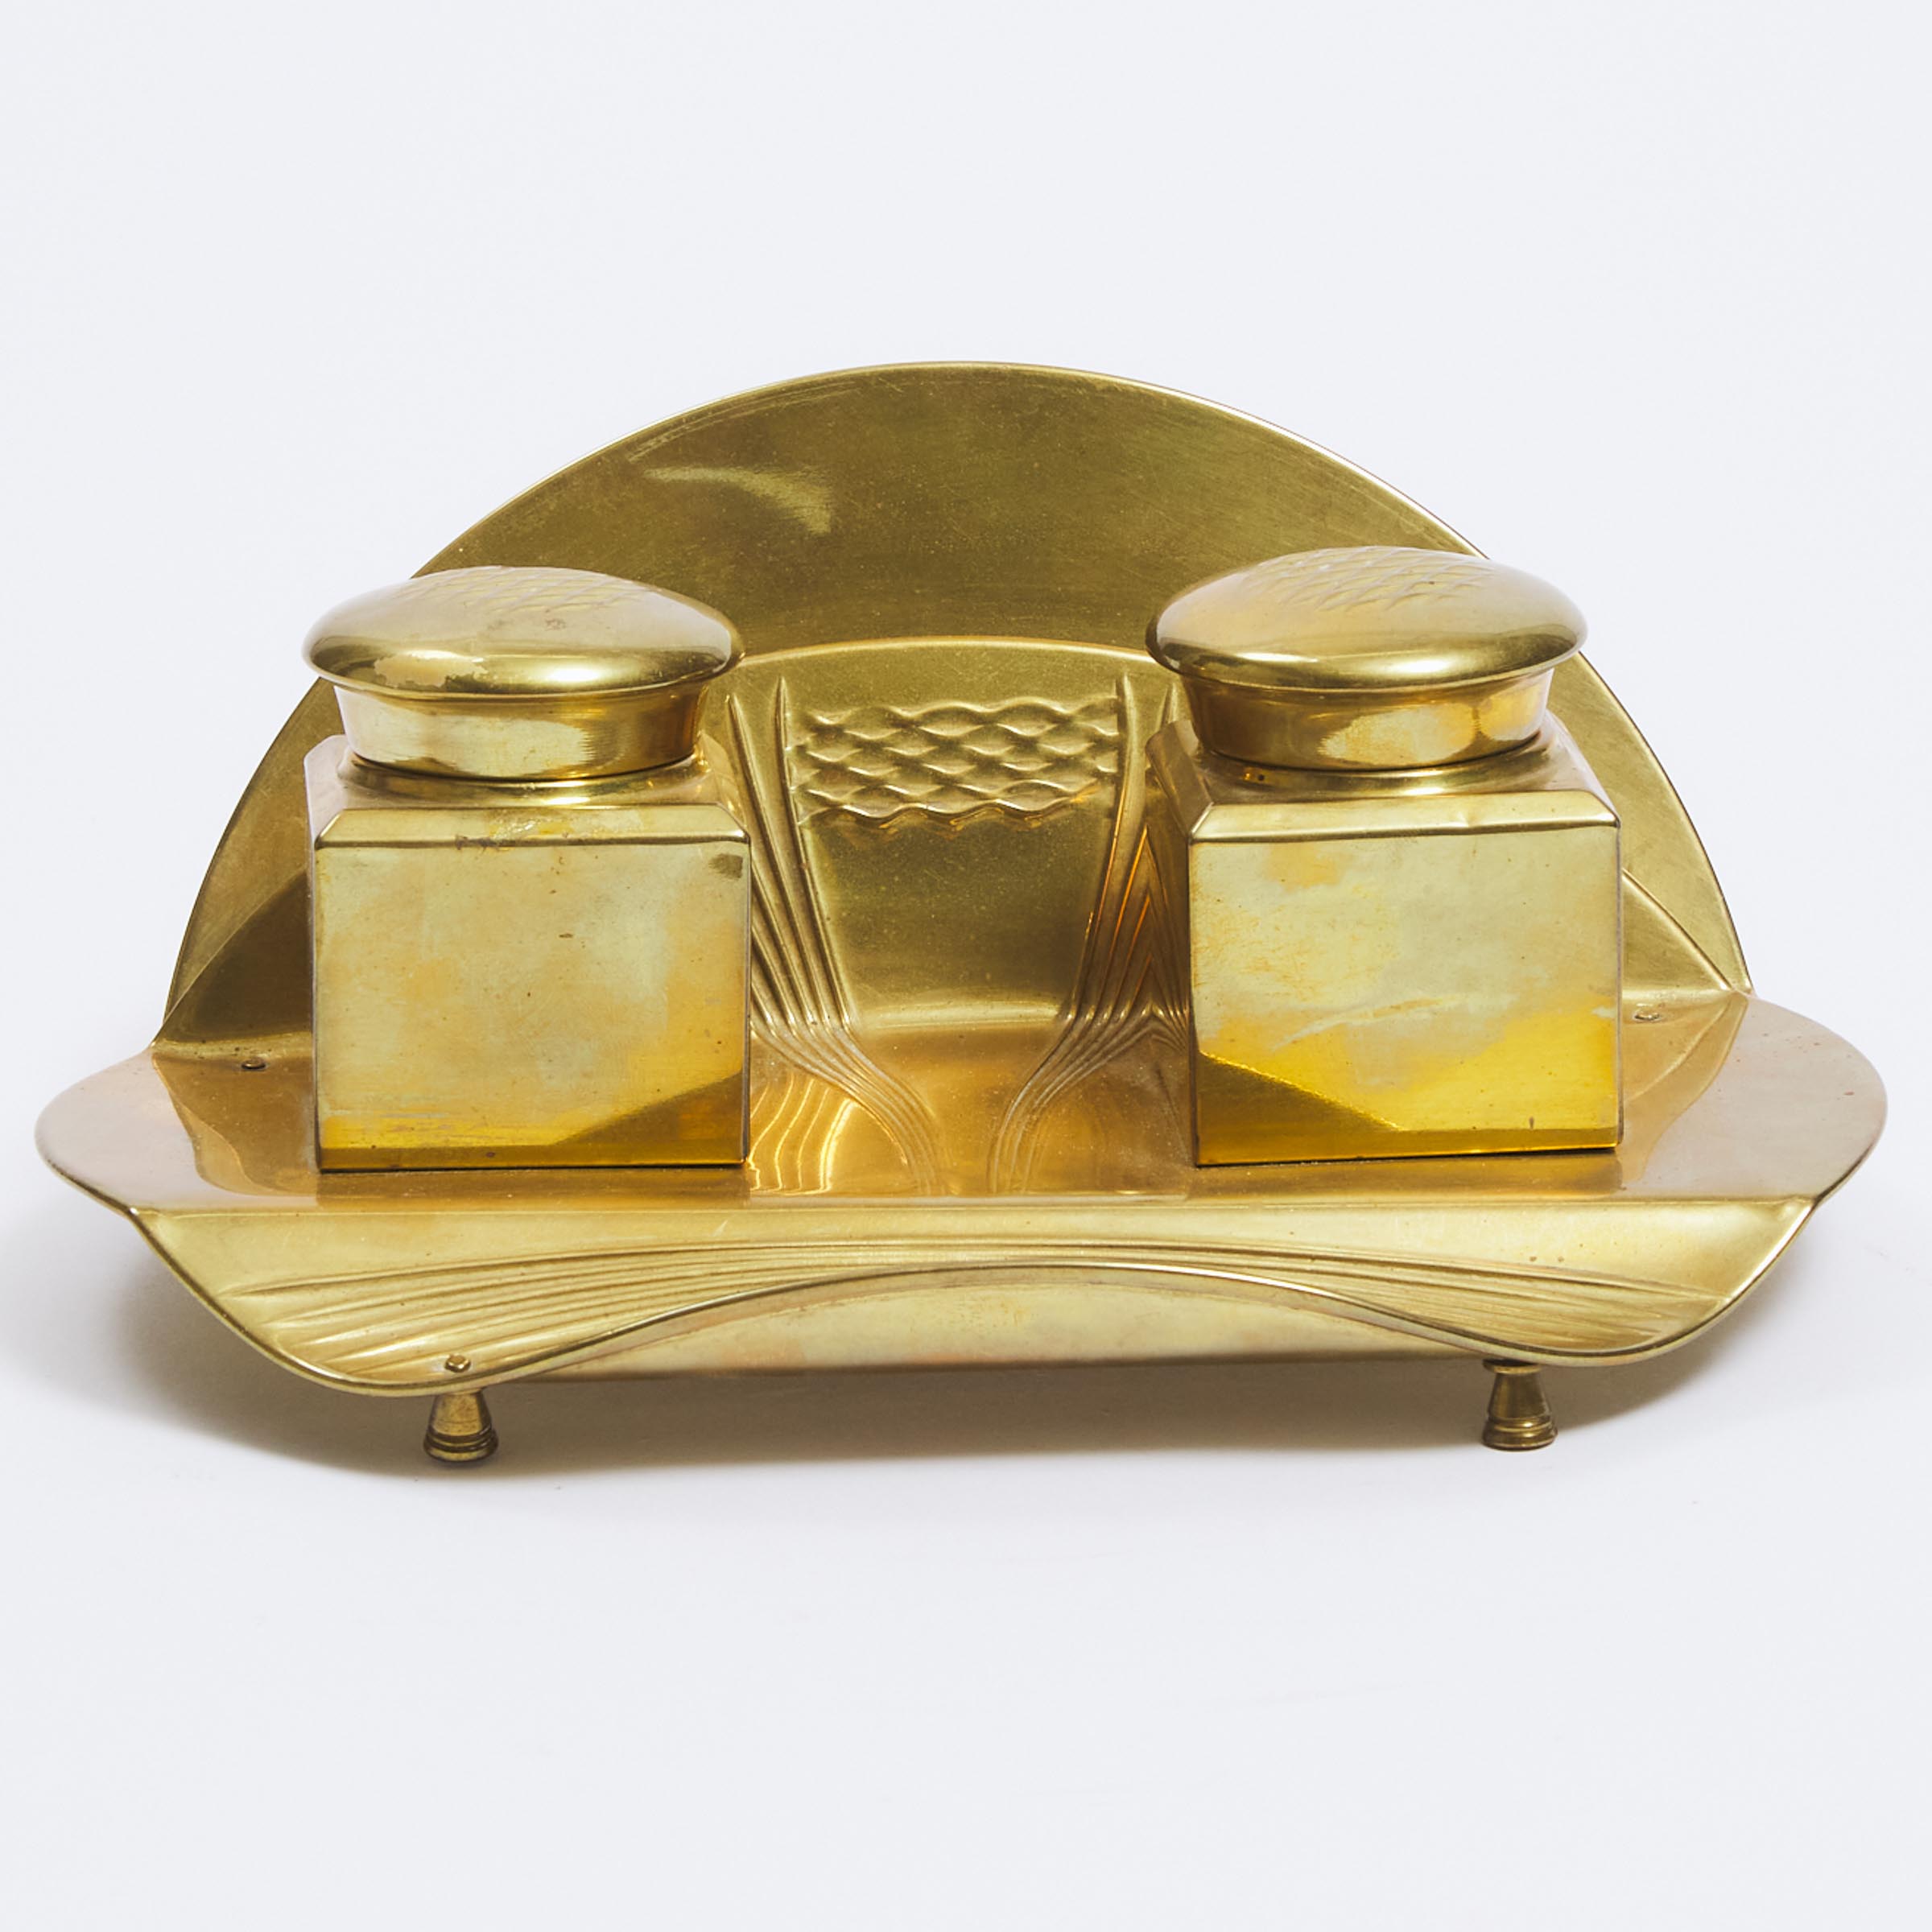 Art Nouveau Brass Desk Stand c 1900 3abb6f